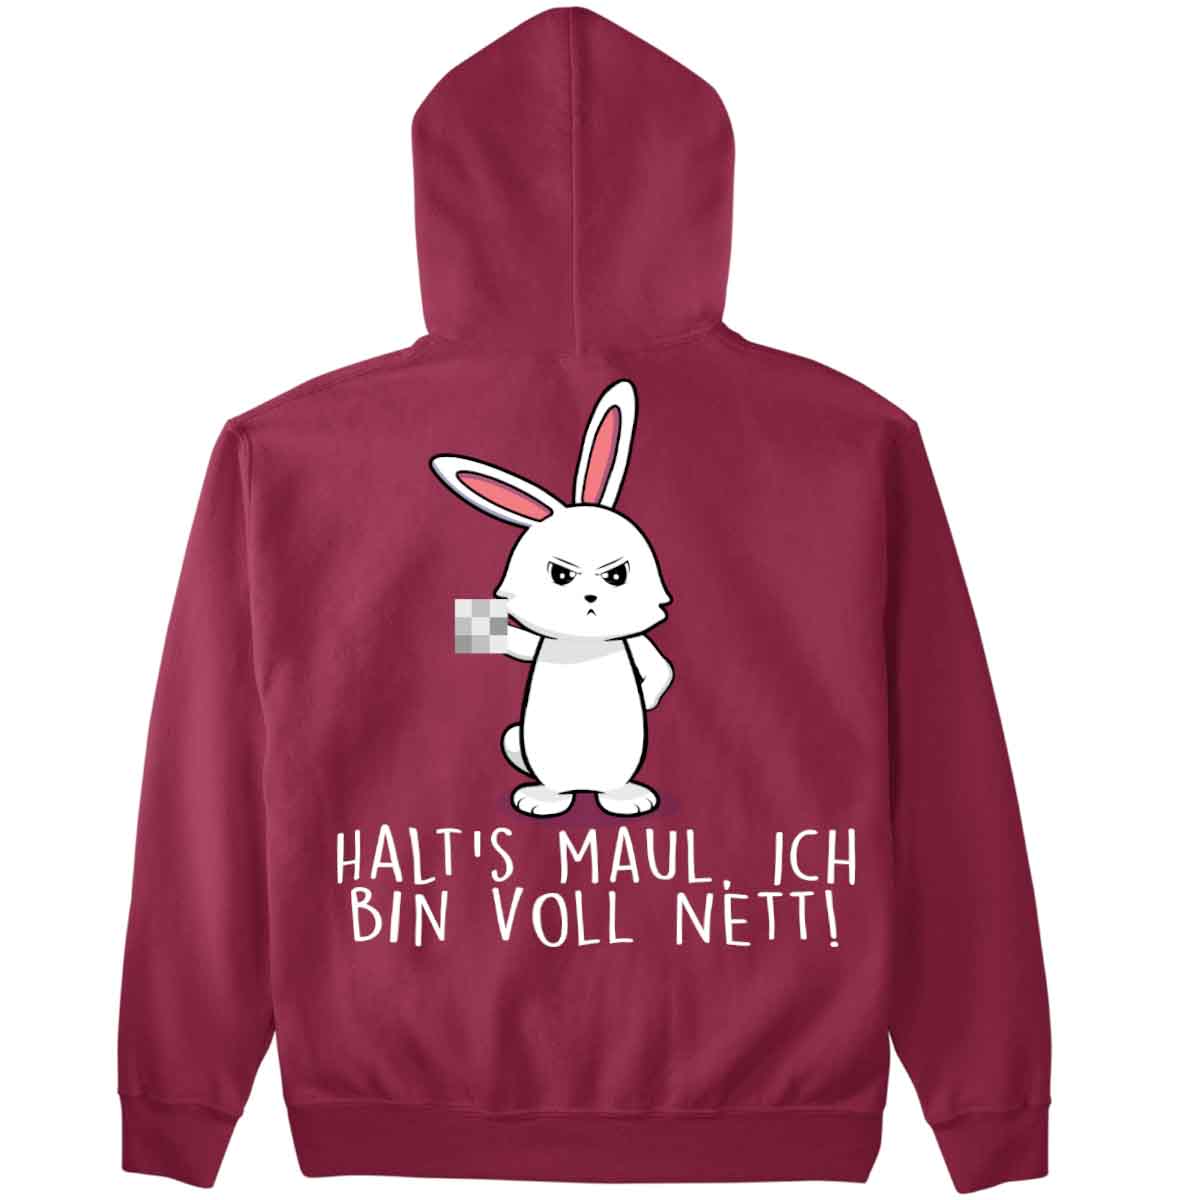 Voll Nett Bunny - Premium Hoodie Unisex Rückendruck